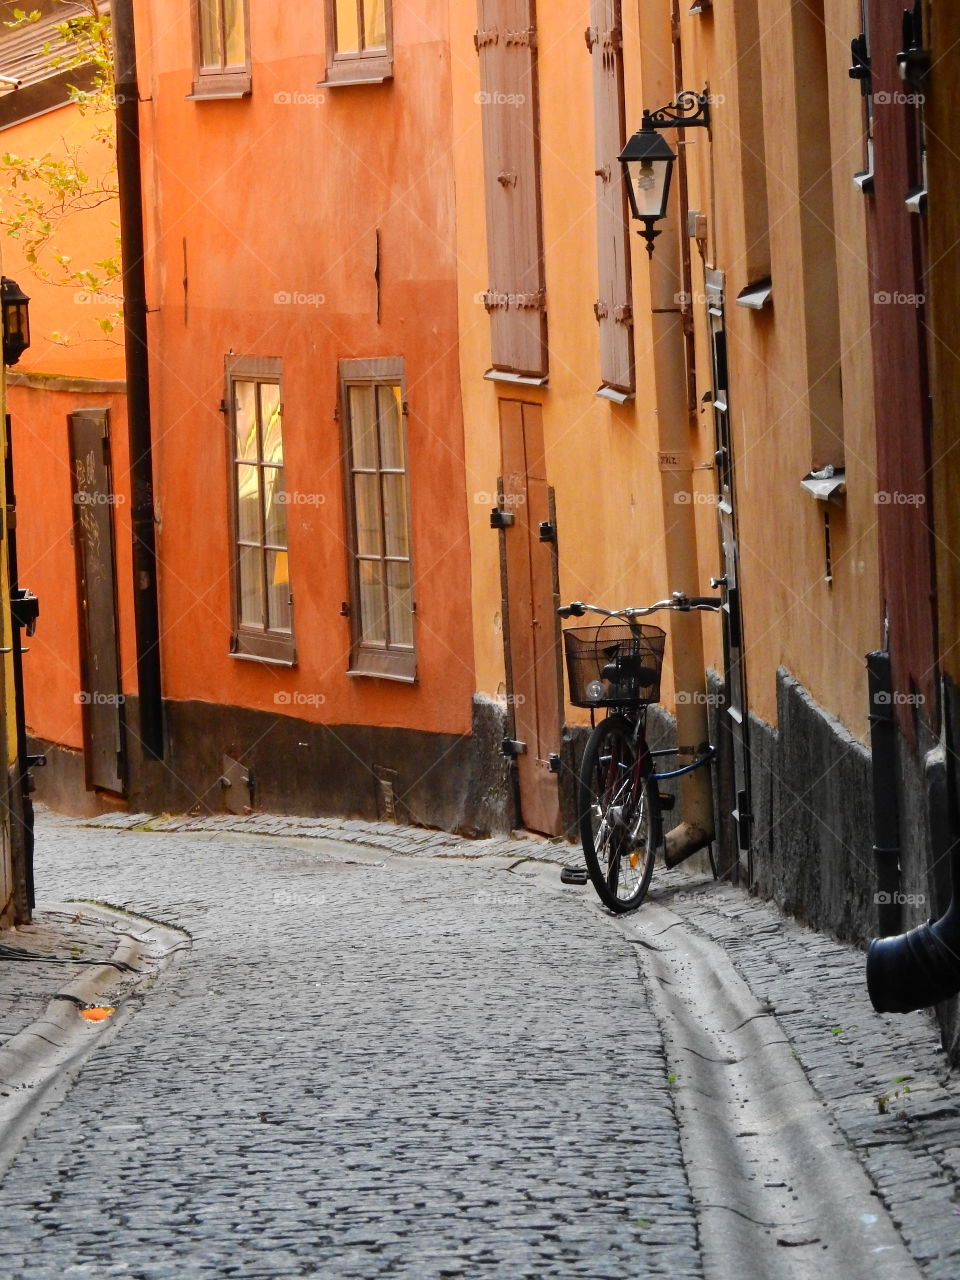 Cobblestone street in Old Town Stockholm